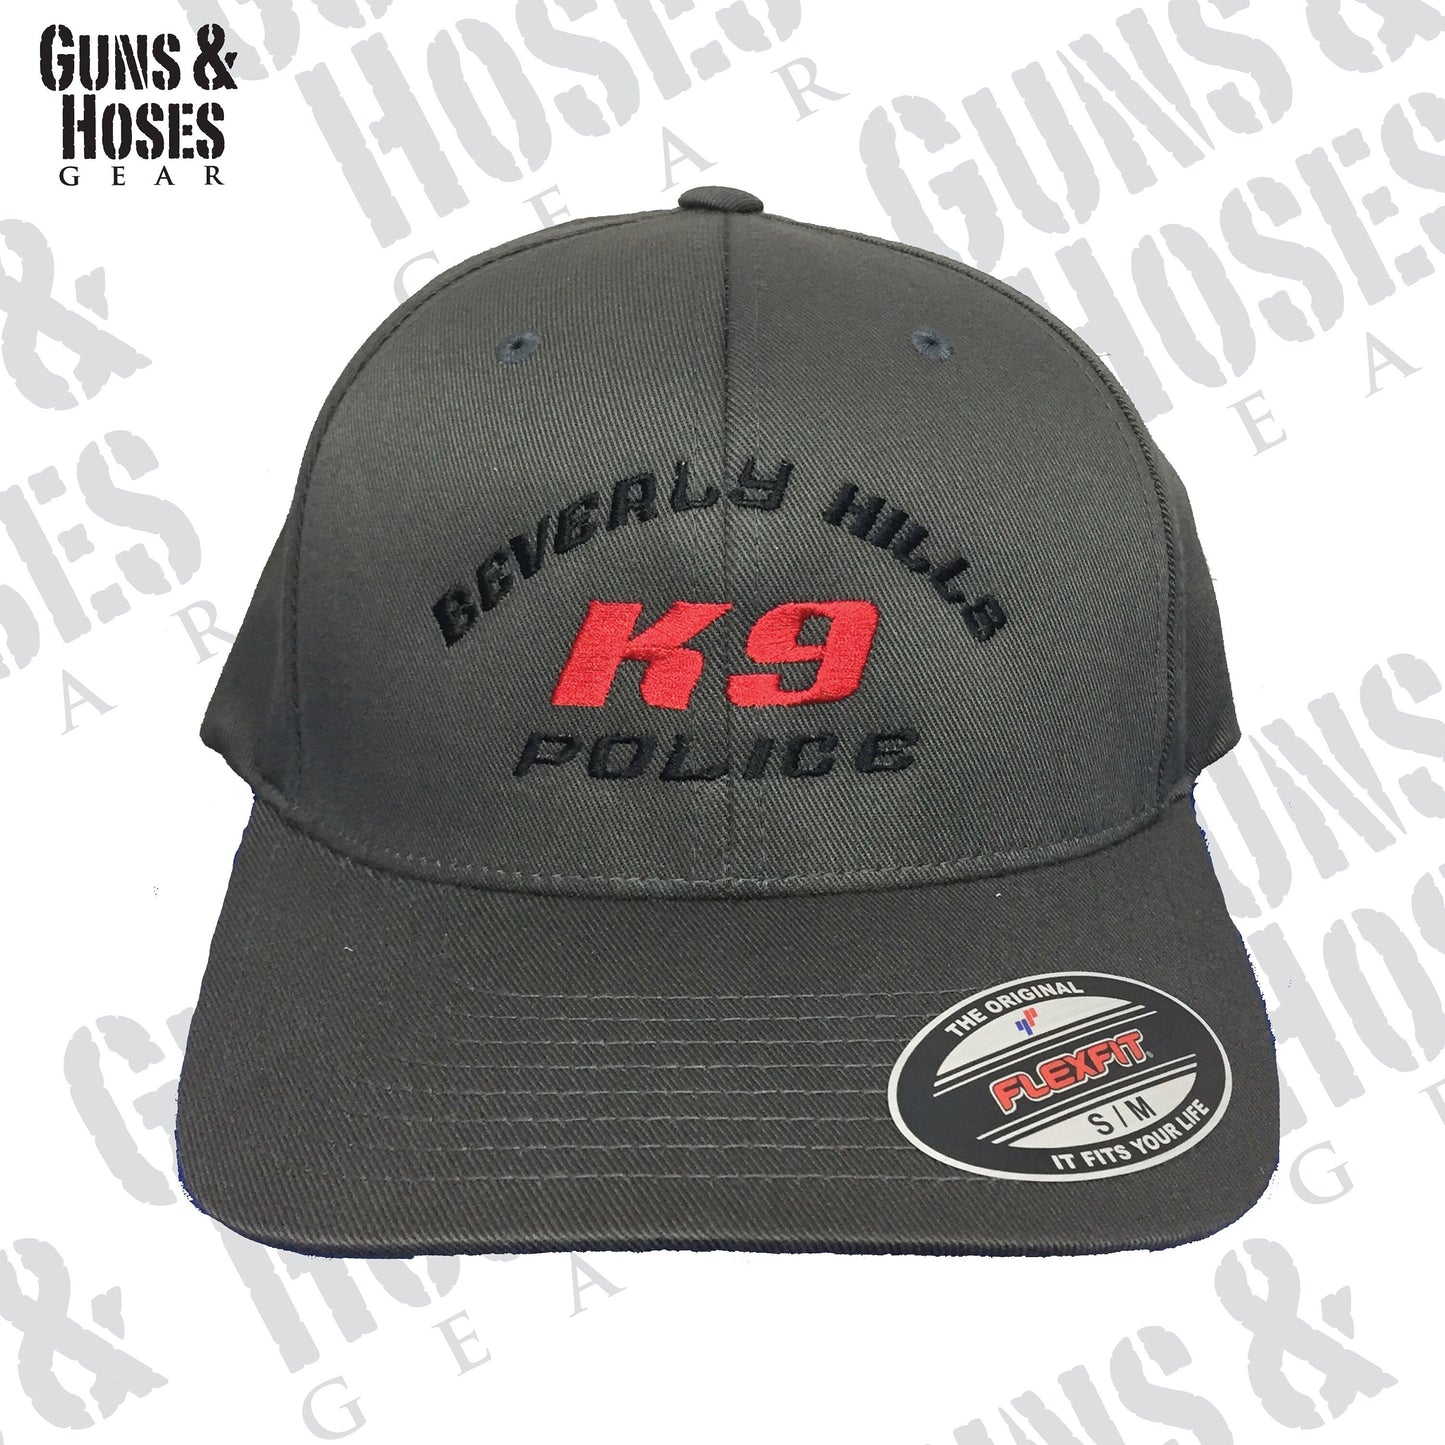 Beverly Hills PD K-9 Hat (Flexfit), Beverly Hills Police, Official K9 Hat, Police Hat, Official K9